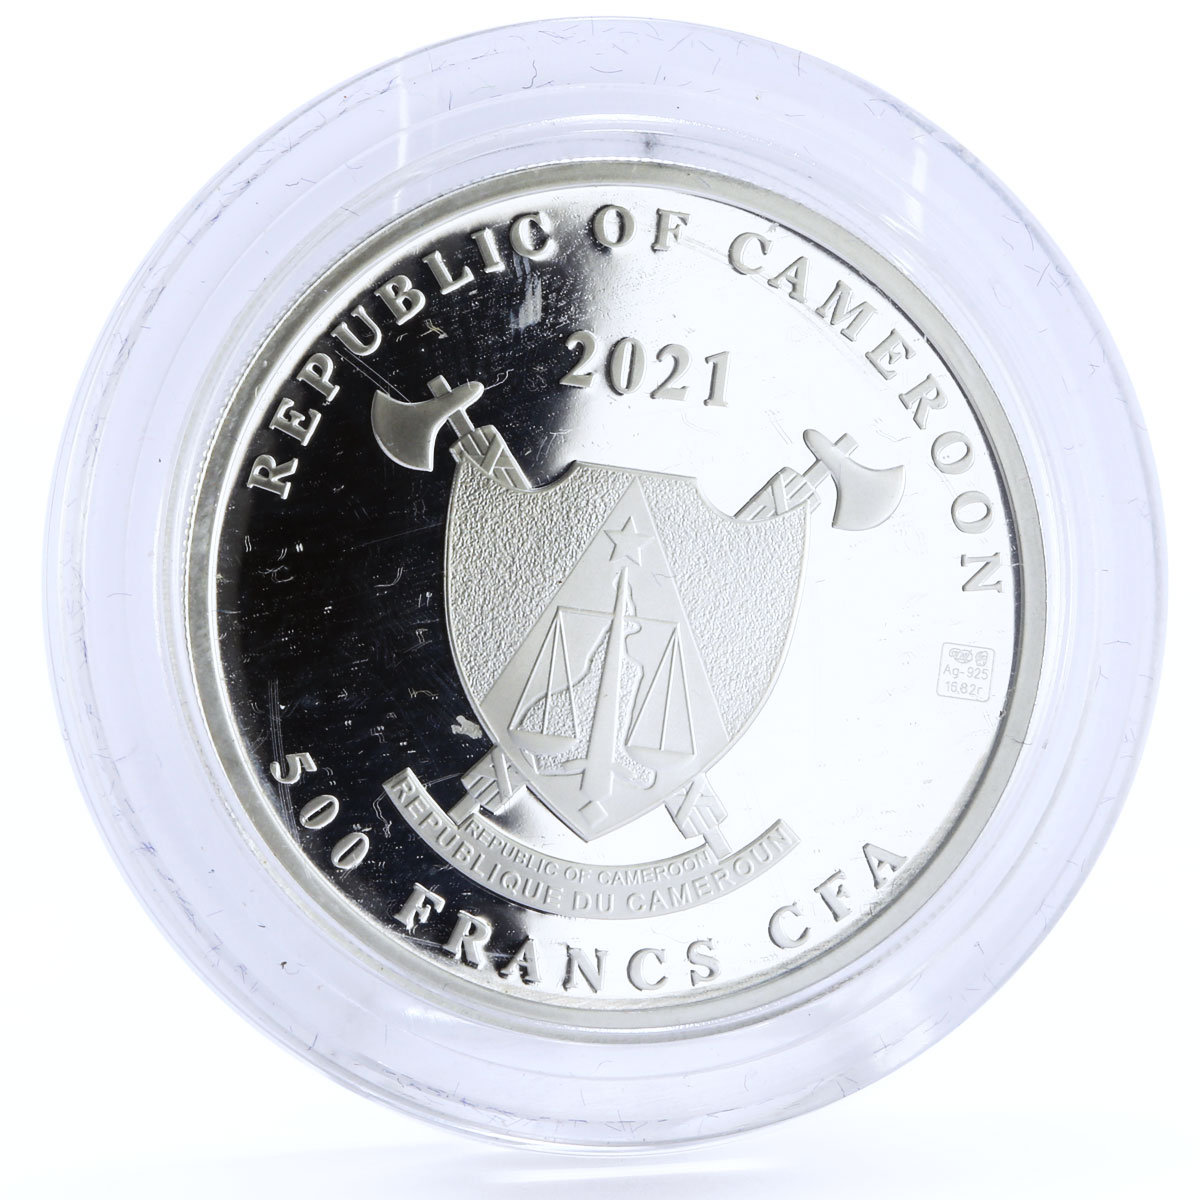 Cameroon 500 francs Crimean Swallow's Nest Palace Birds Ship silver coin 2021